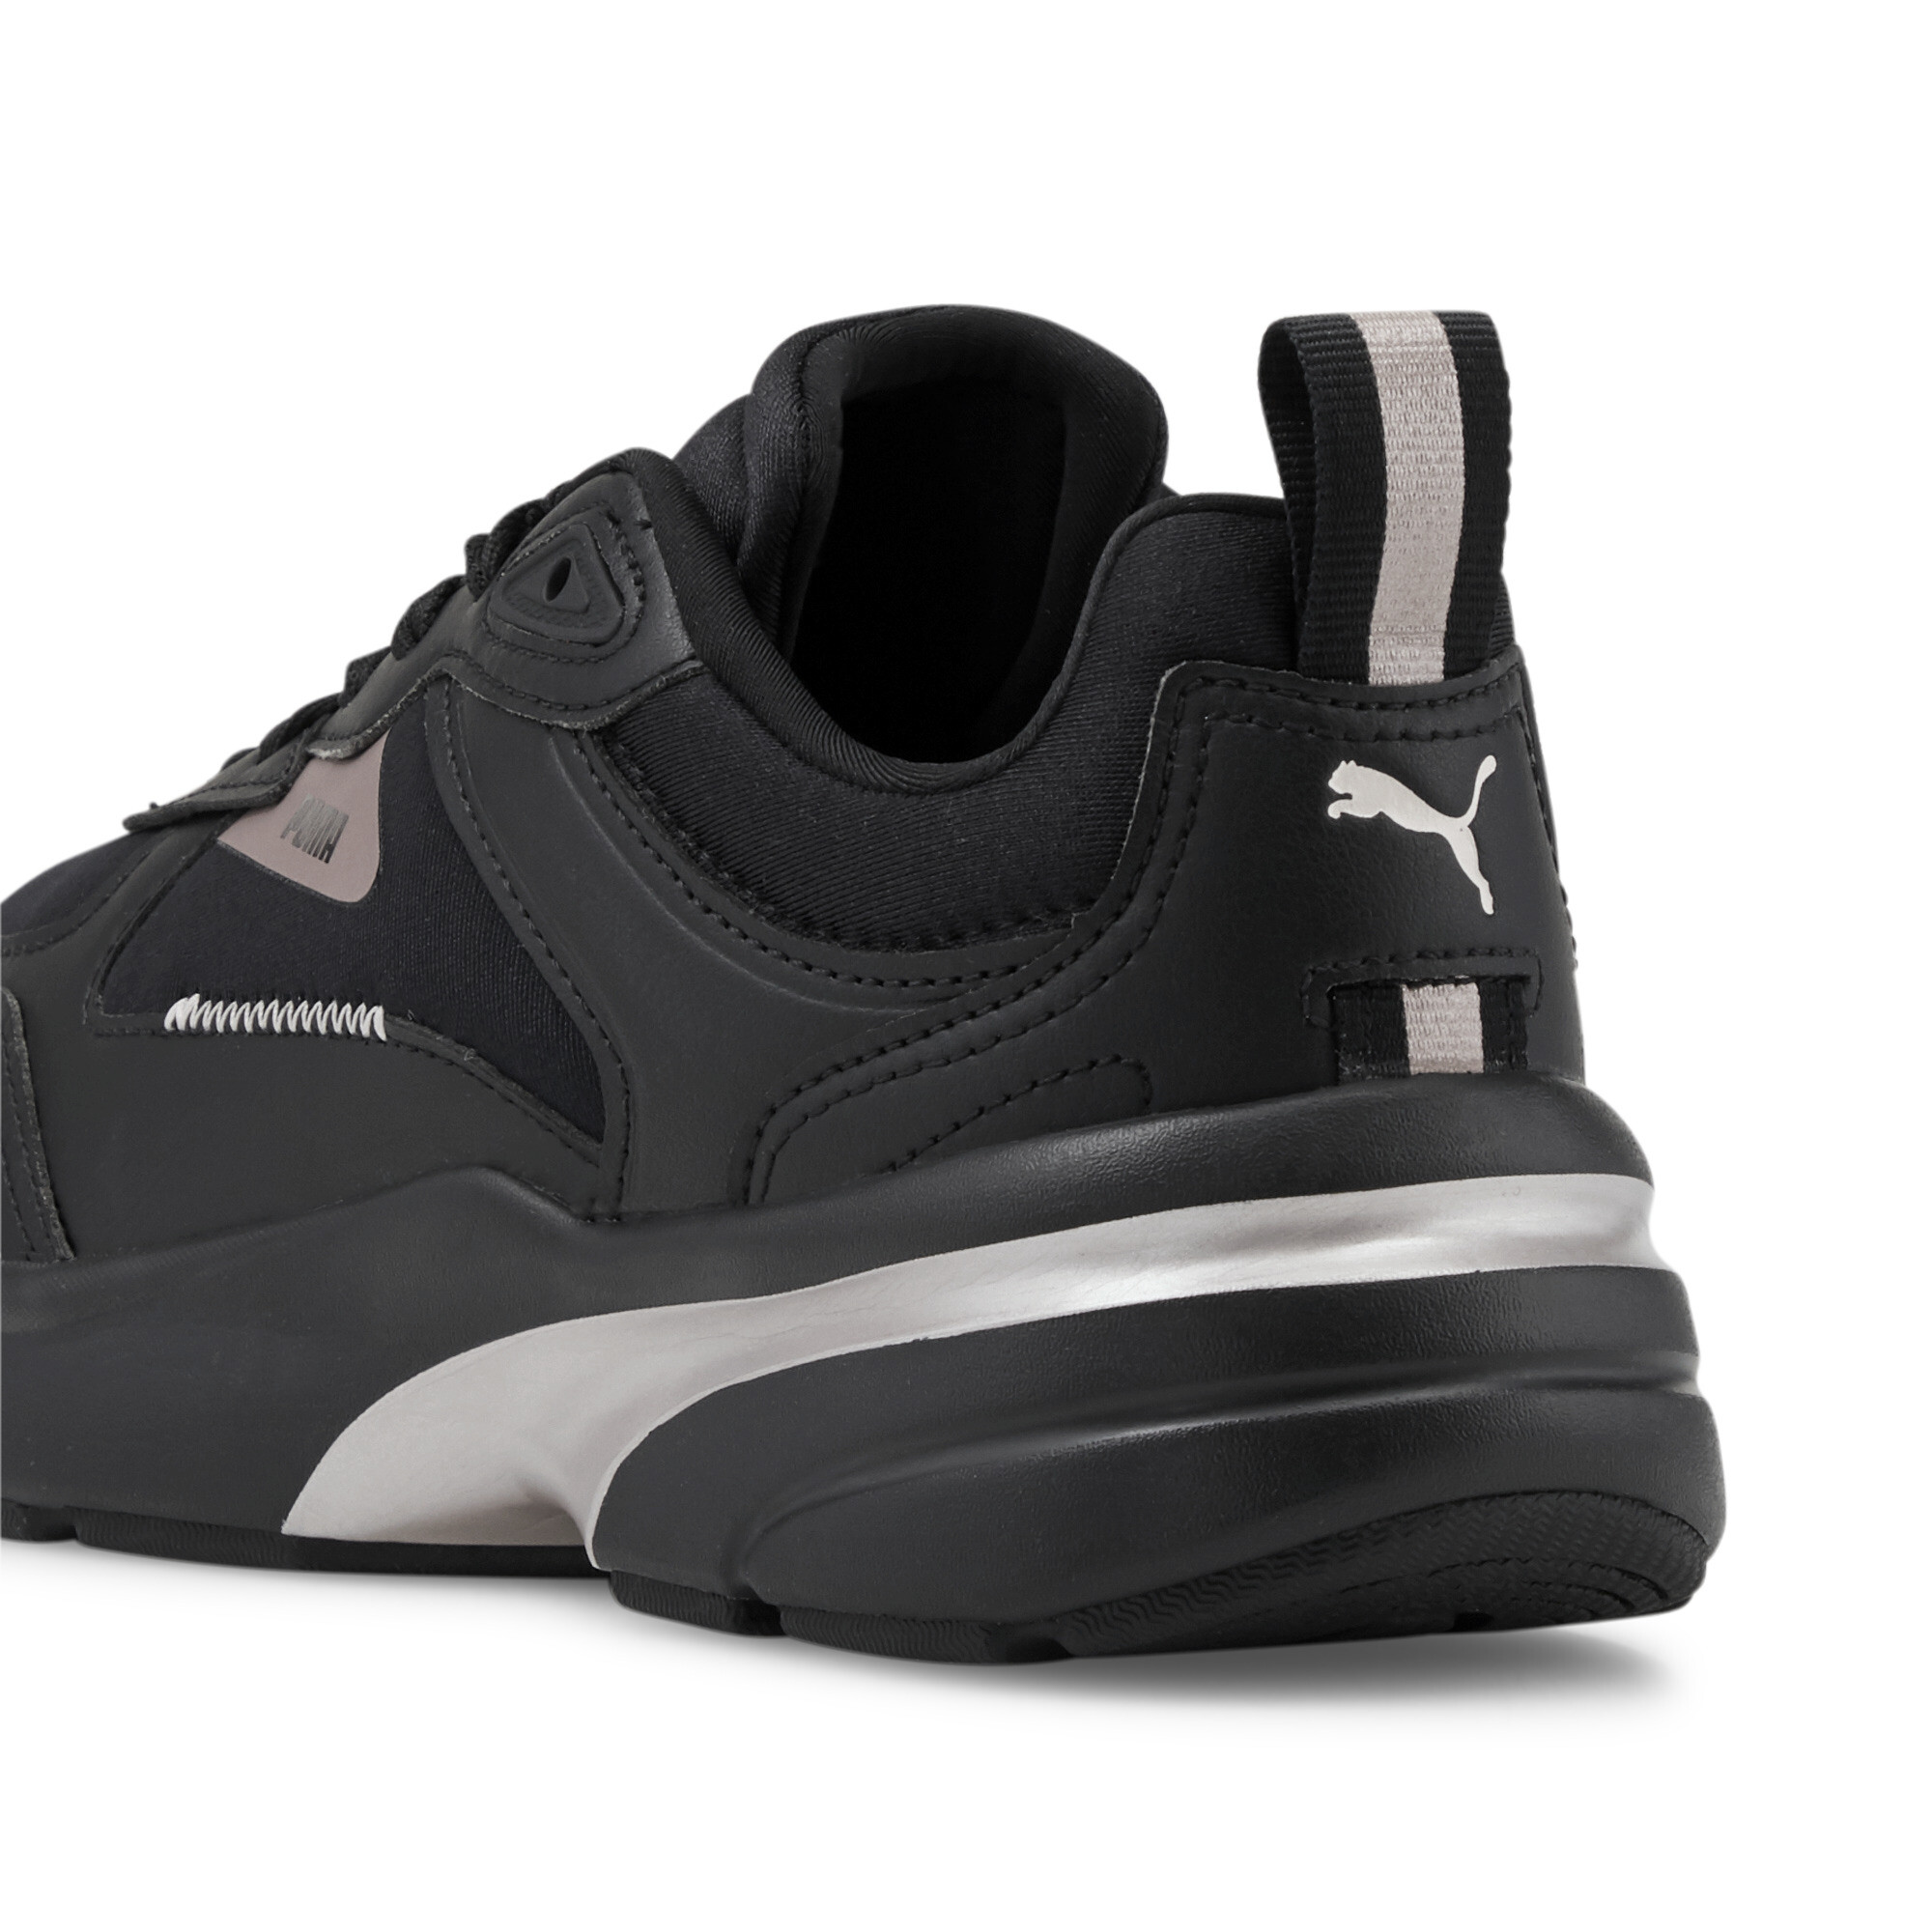 Women's PUMA FS Runner Metallic Sneakers In 10 - Black, Size EU 41